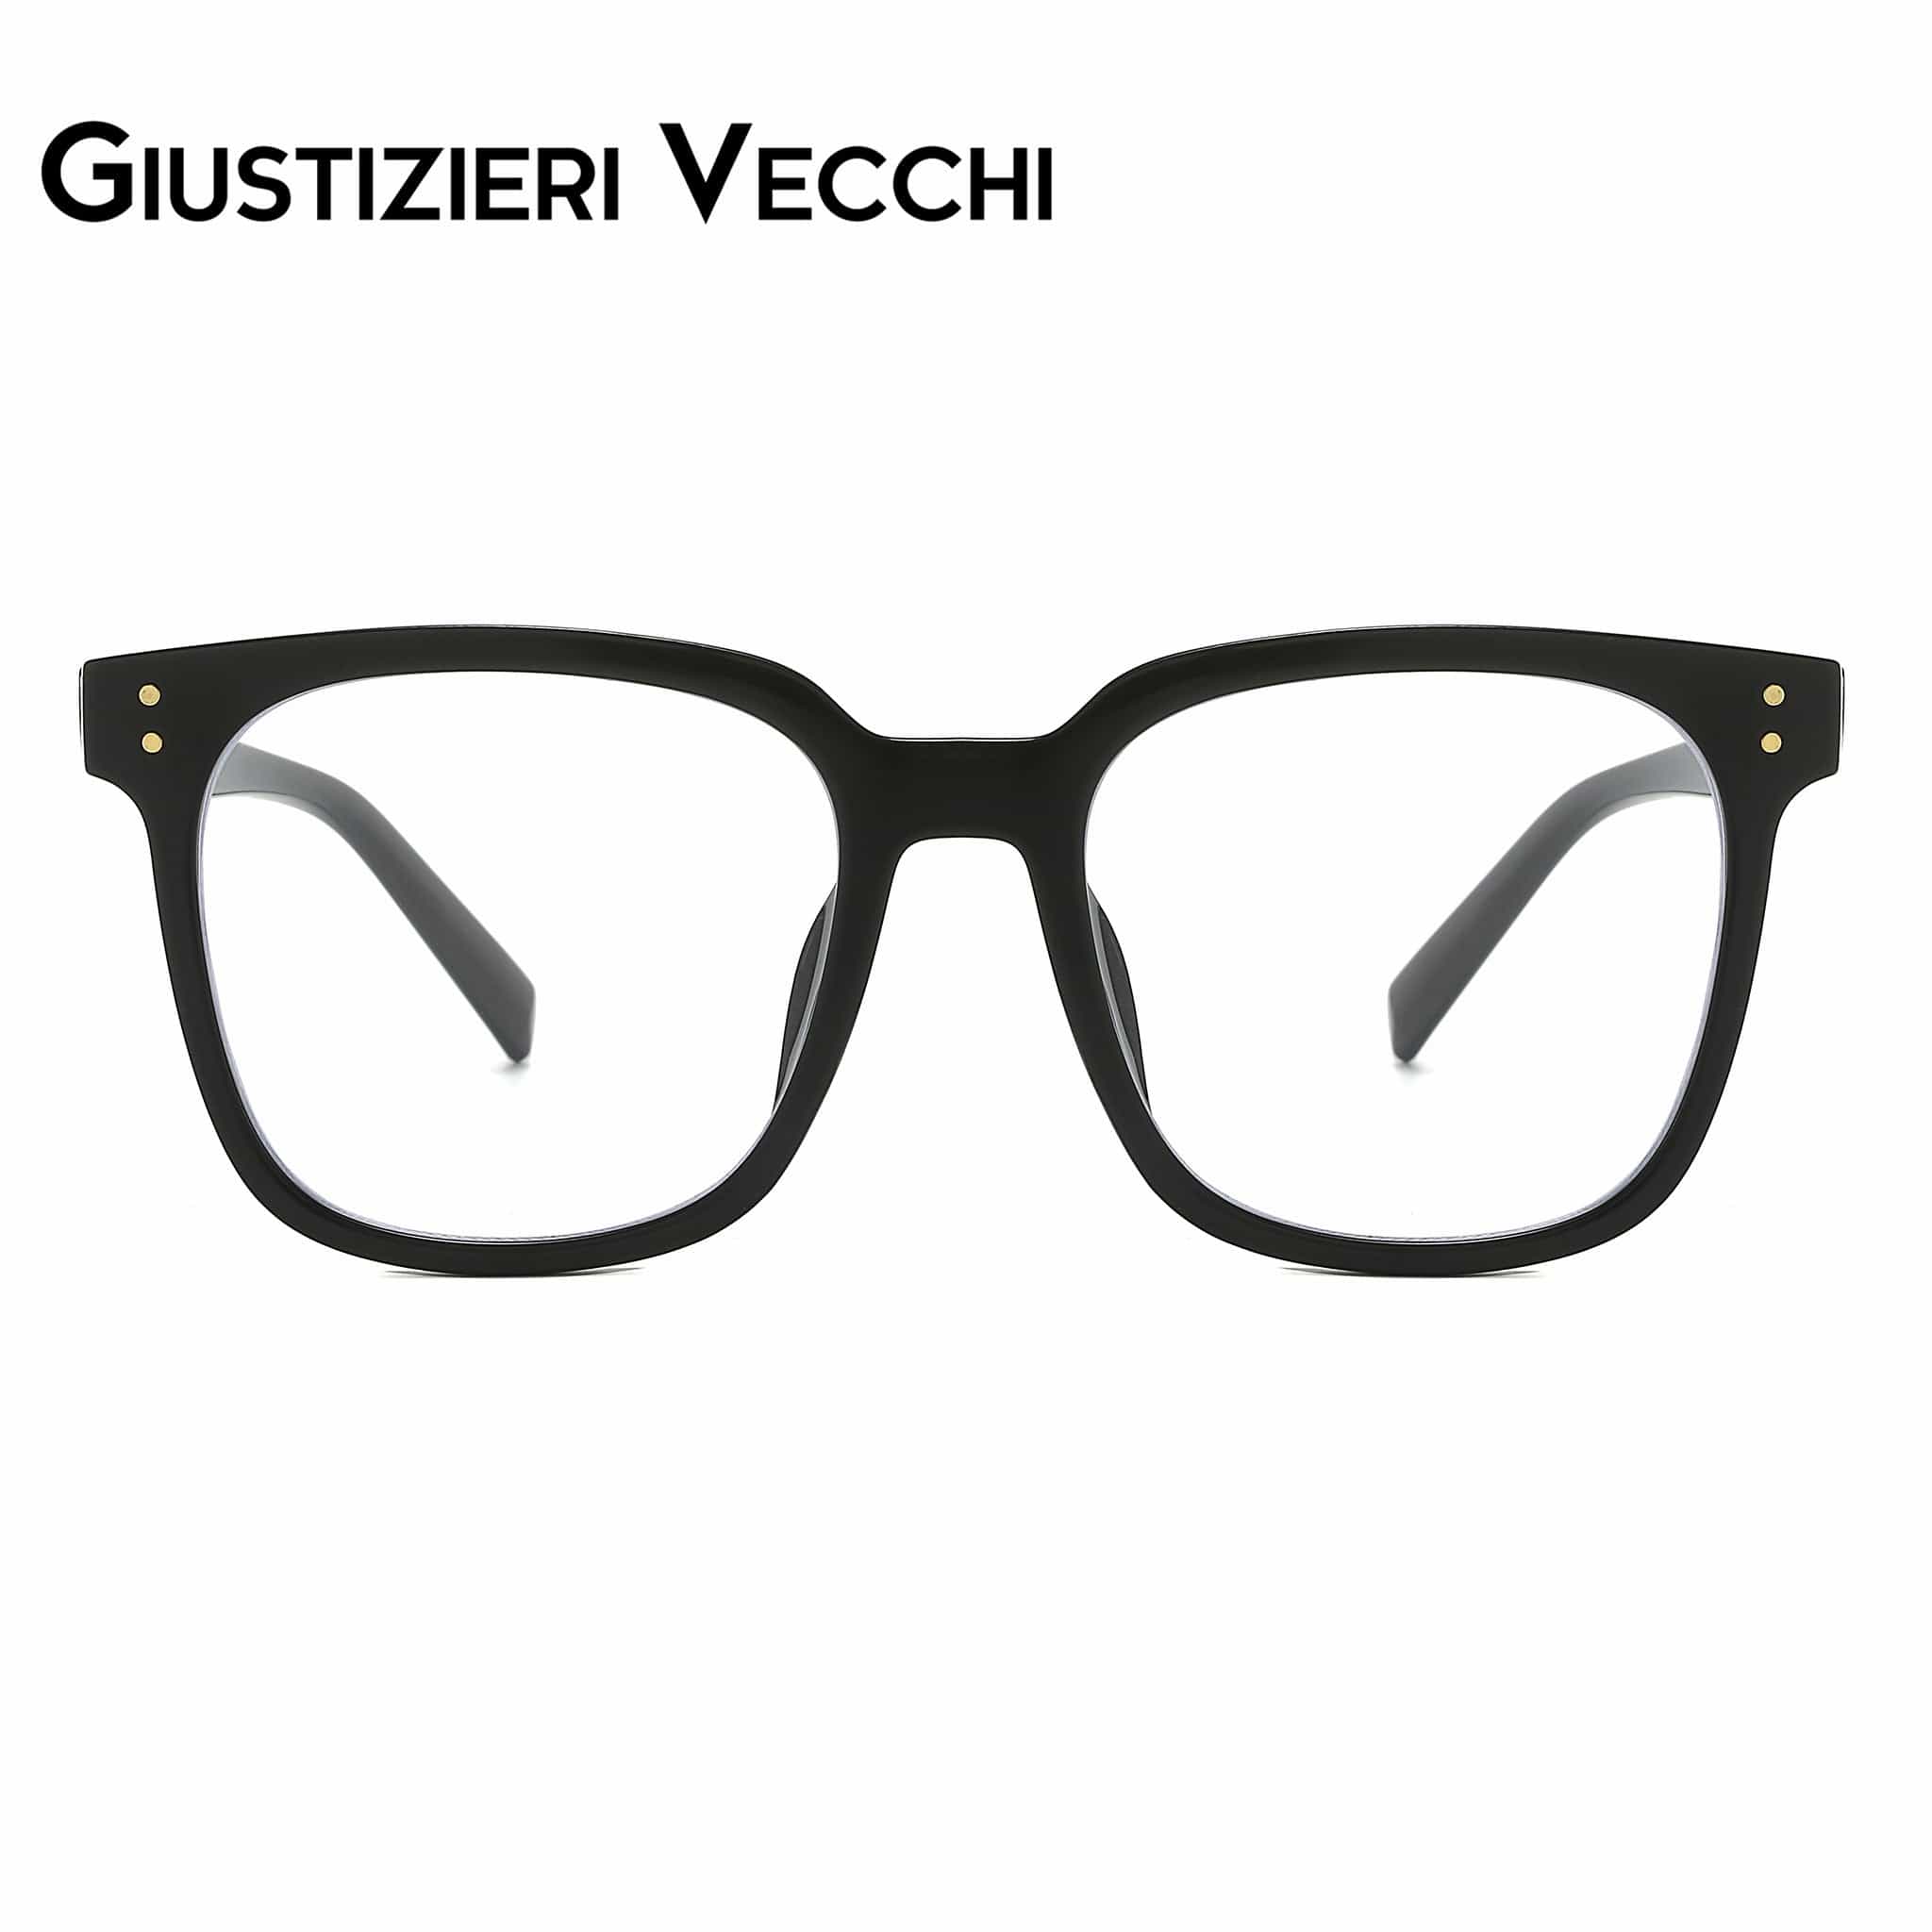 GIUSTIZIERI VECCHI Eyeglasses Medium / Black Gioia Uno